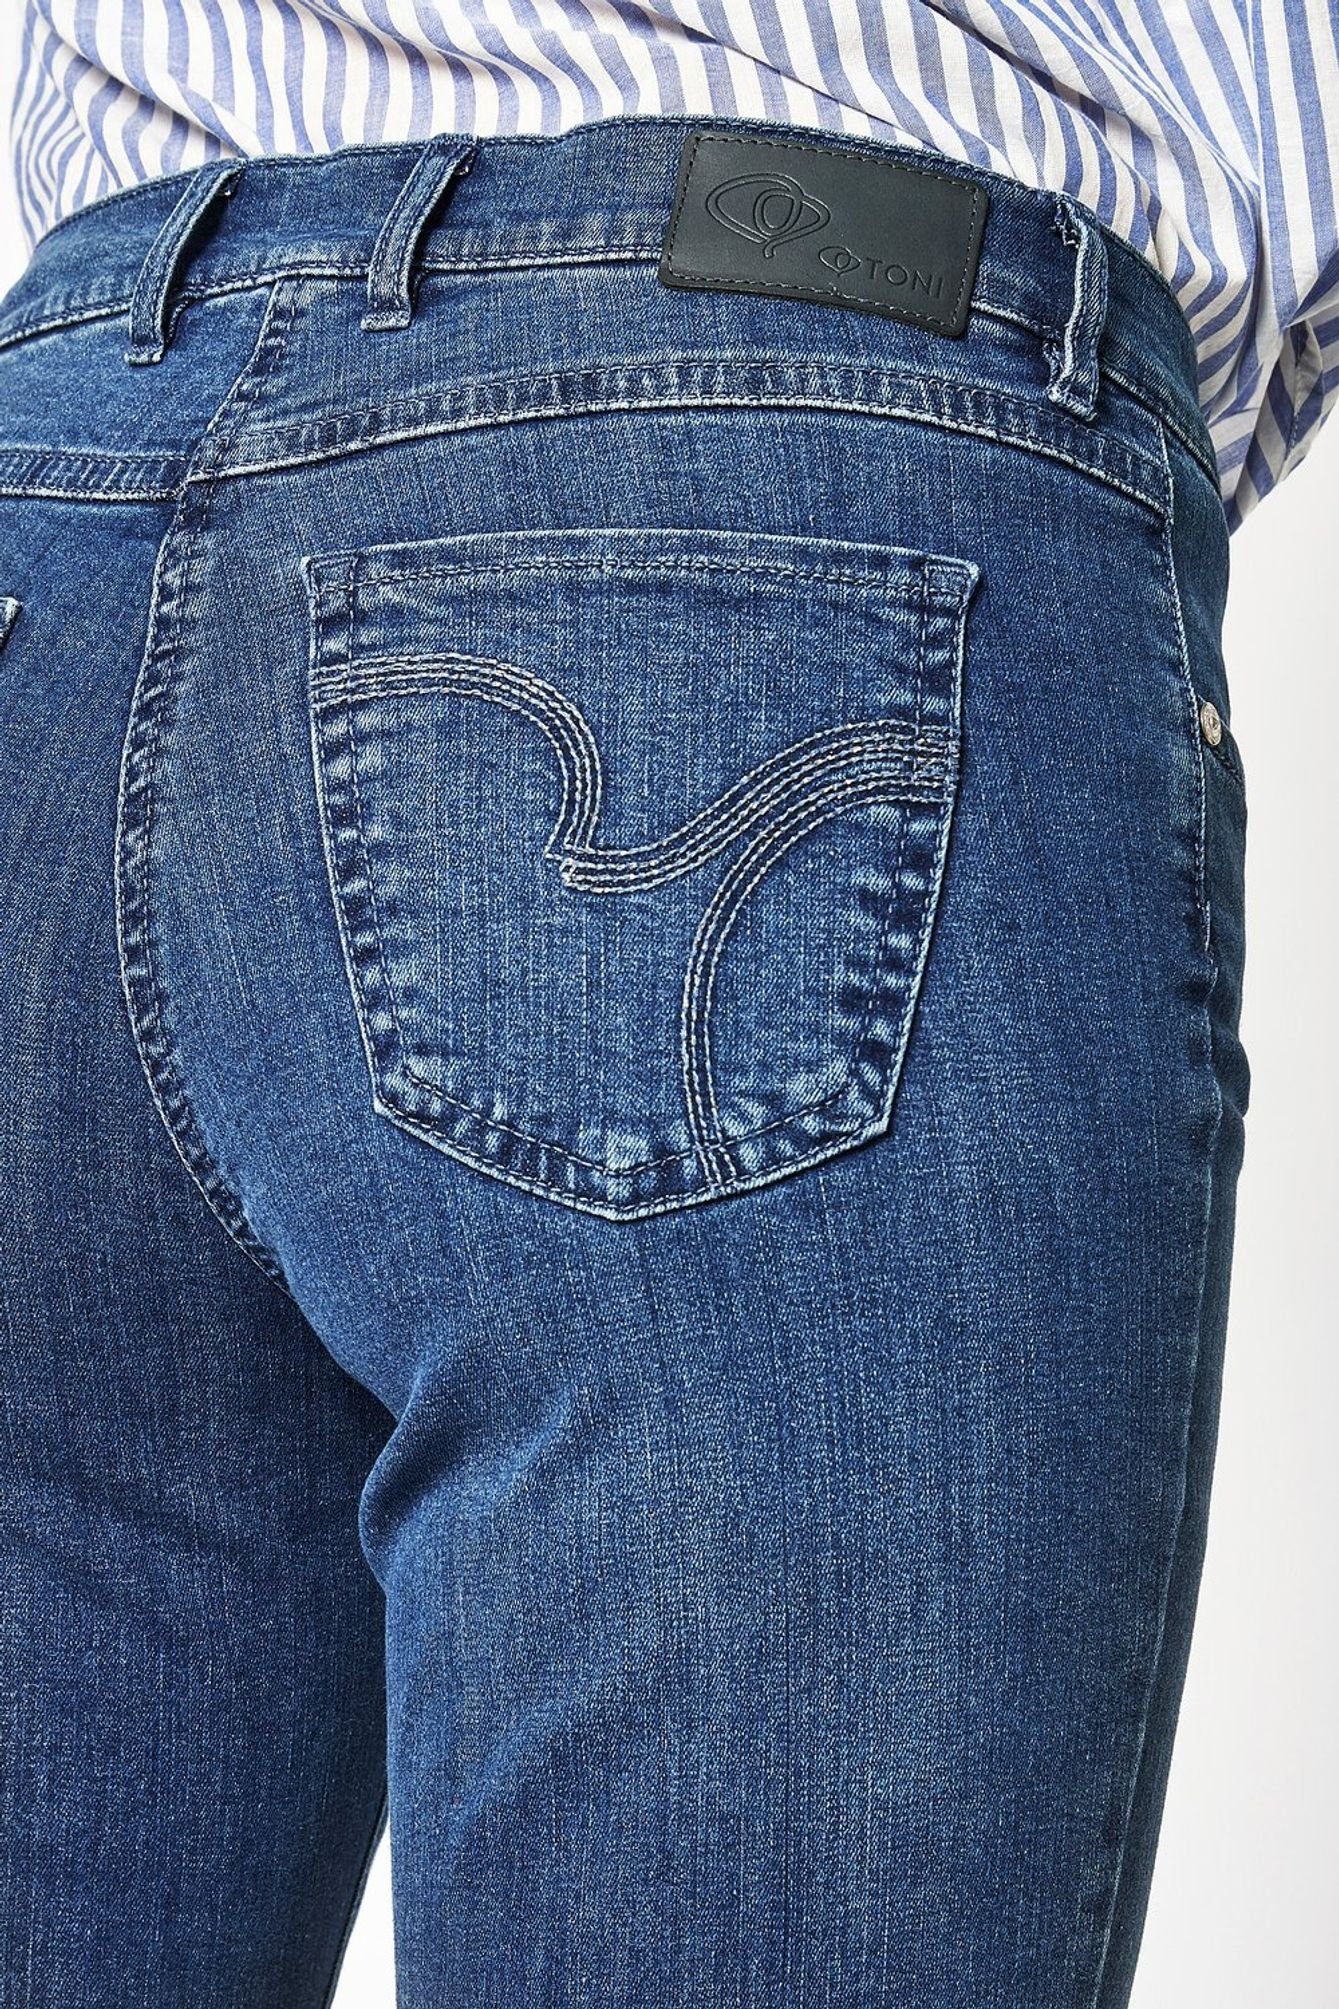 5-Pocket-Jeans blue (502) 12-04 used TONI 1106 5-Pocket-Design mid